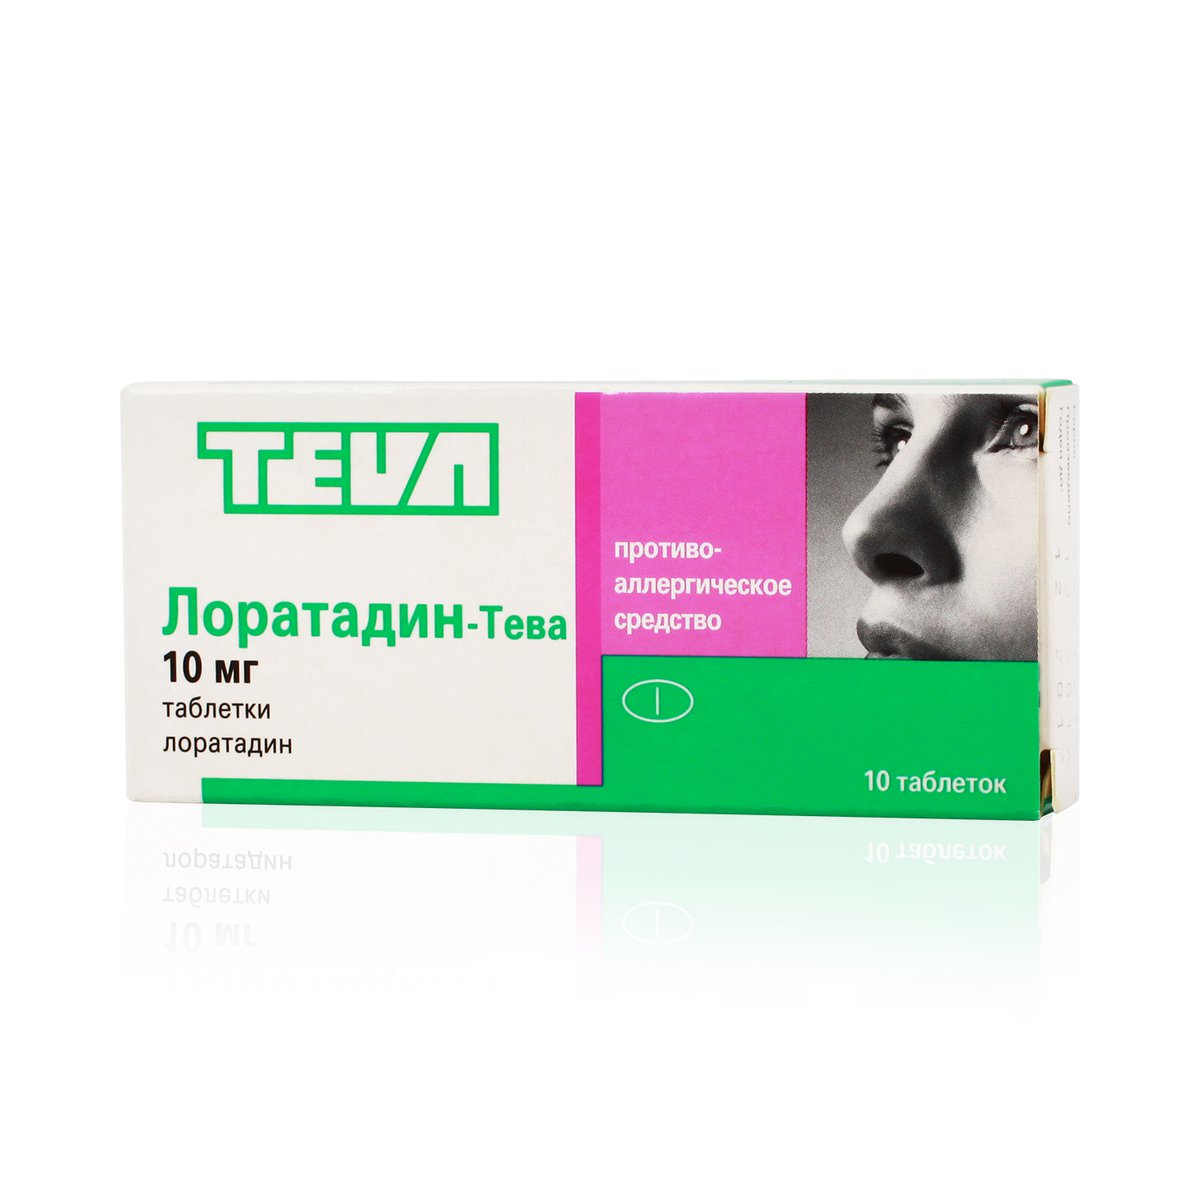 Лоратадин-Тева (таблетки, 10 шт, 10 мг, для приема внутрь) - цена .